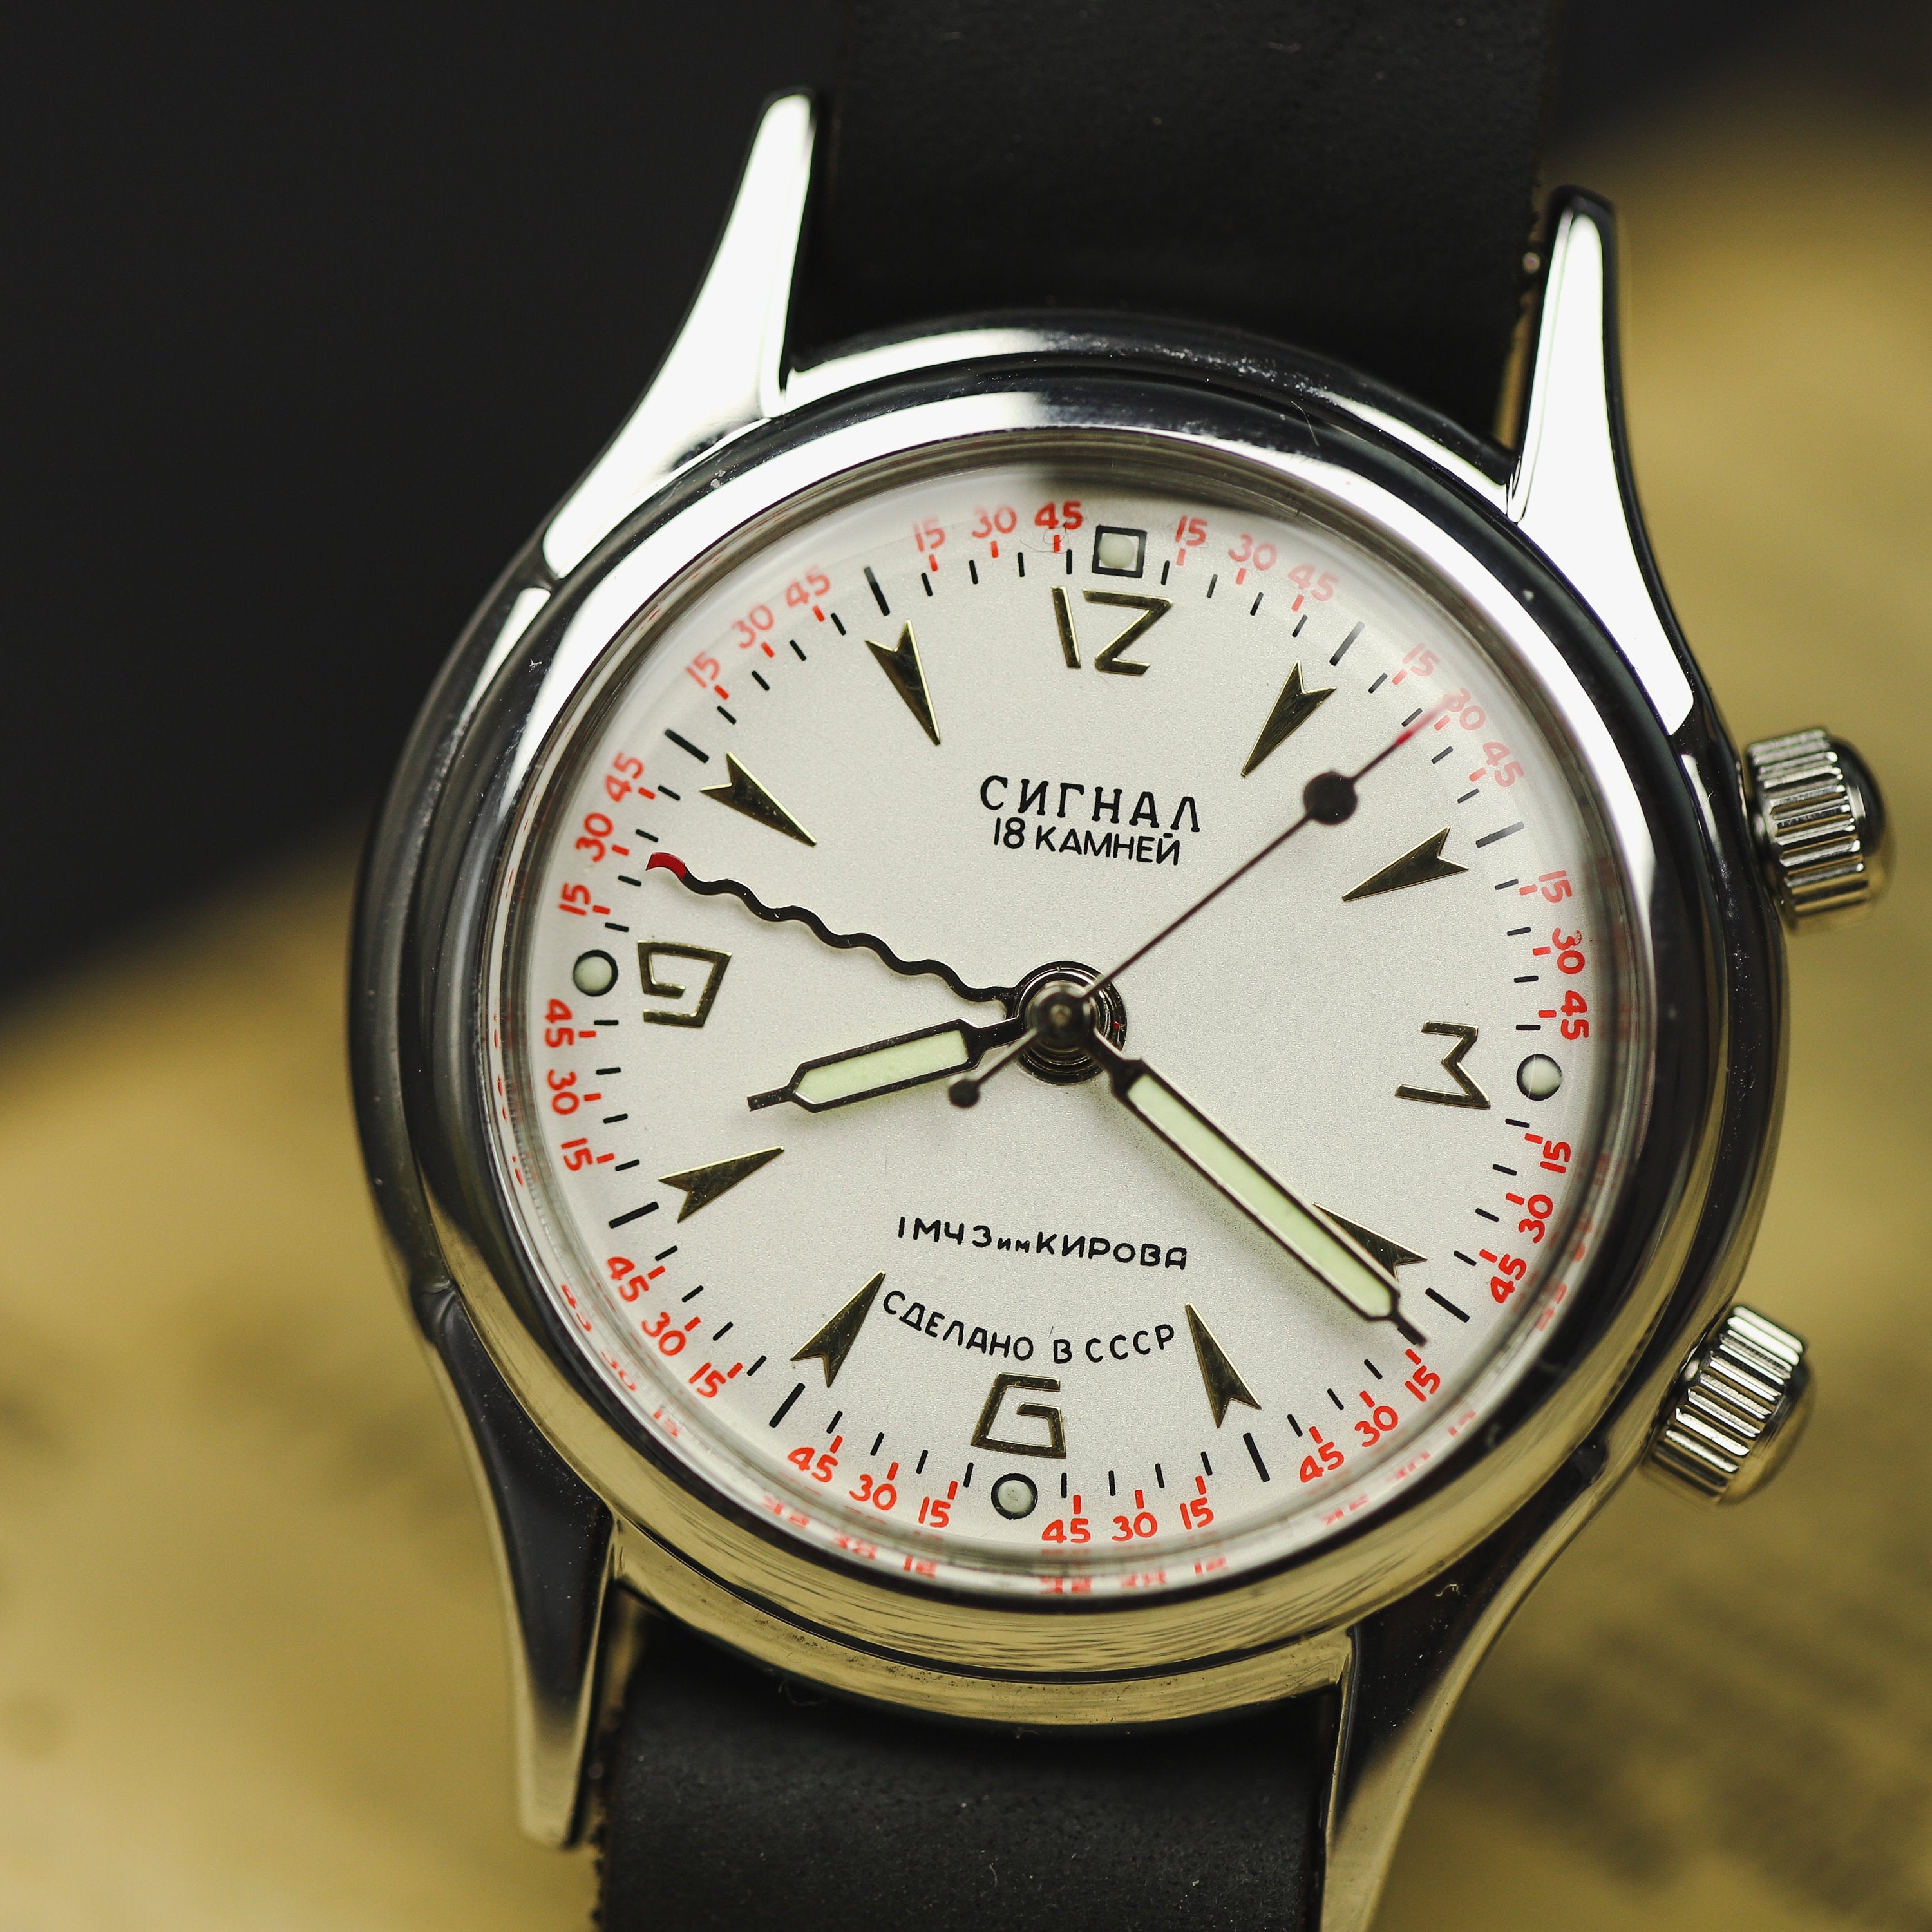 Soviet vintage watch POLJOT 1960s. very rare mechanical watch